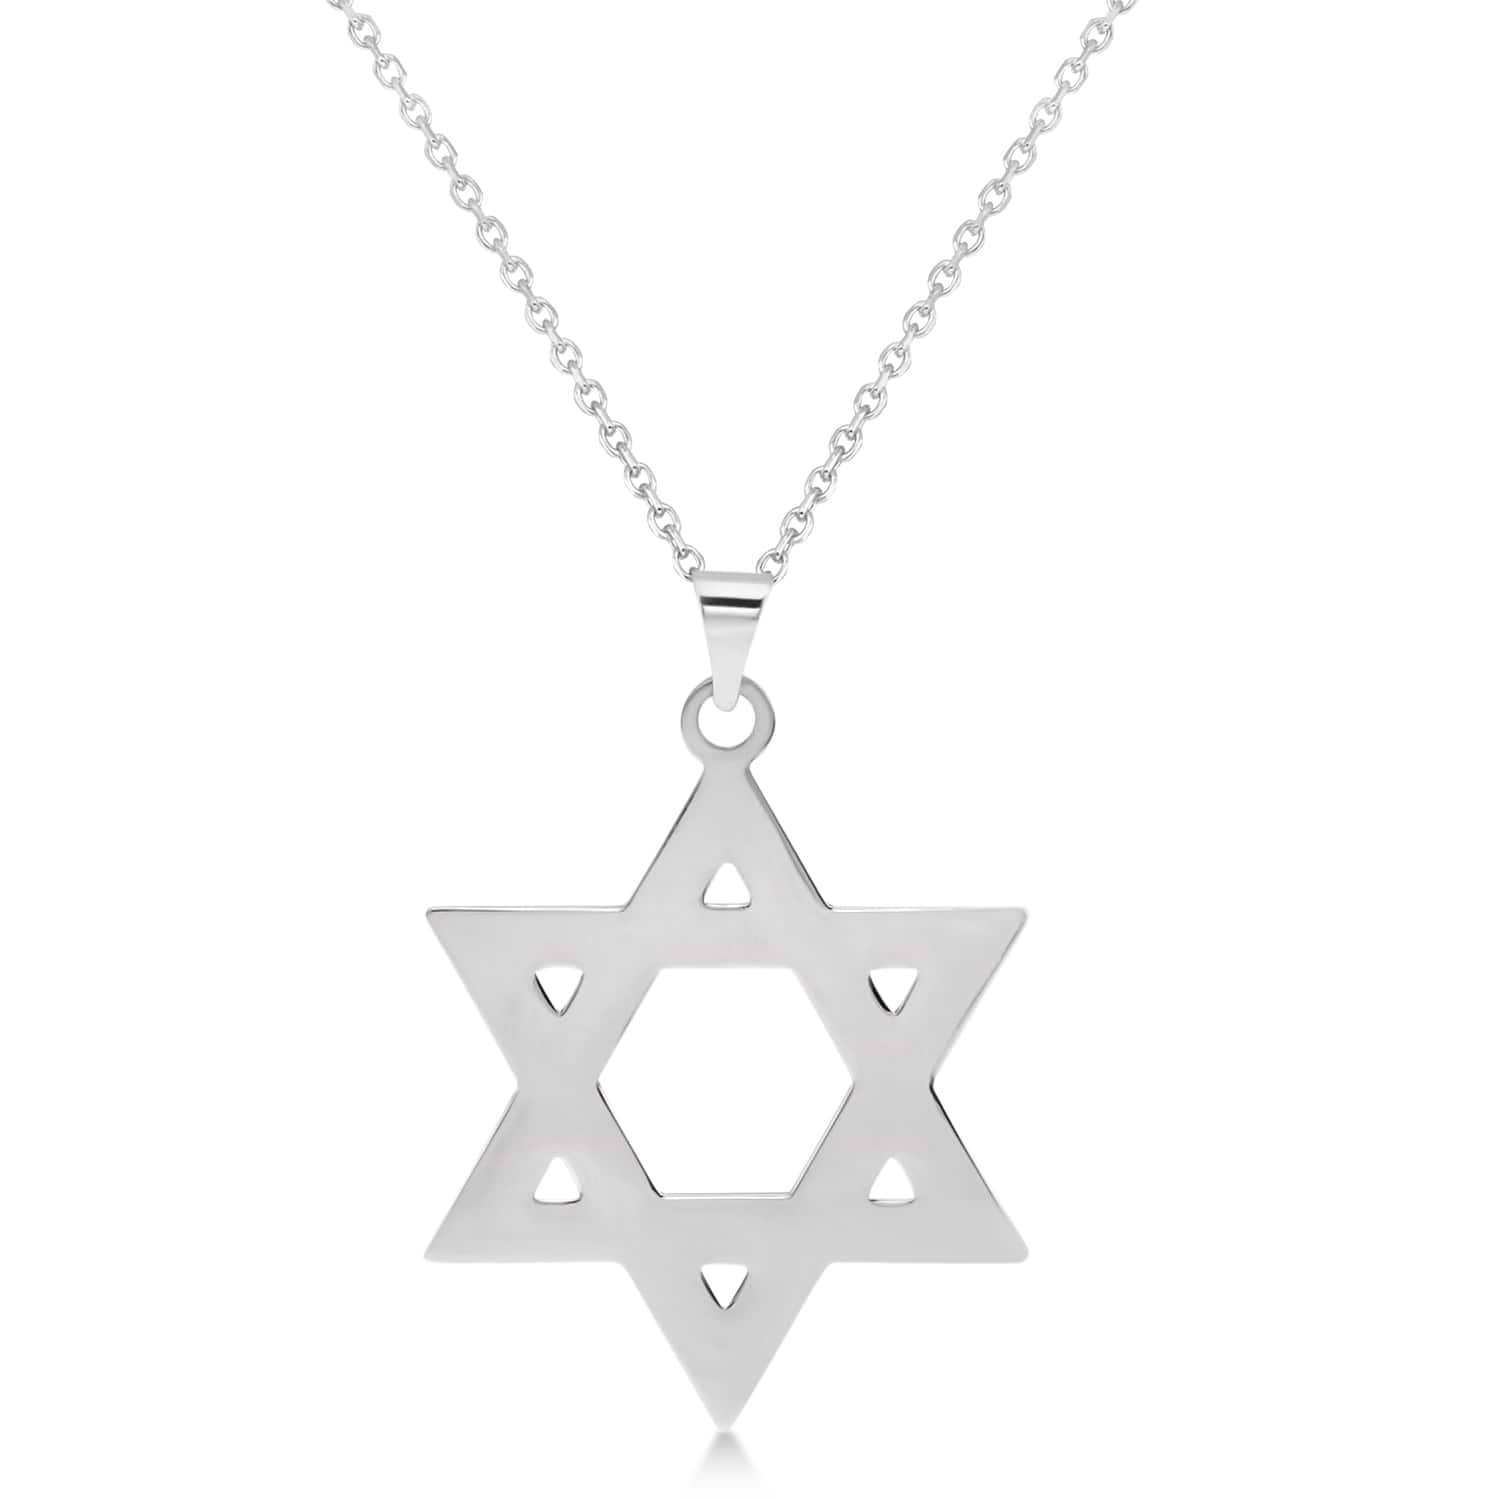 Jewish Star of David Pendant Pendant Necklace 14K White Gold